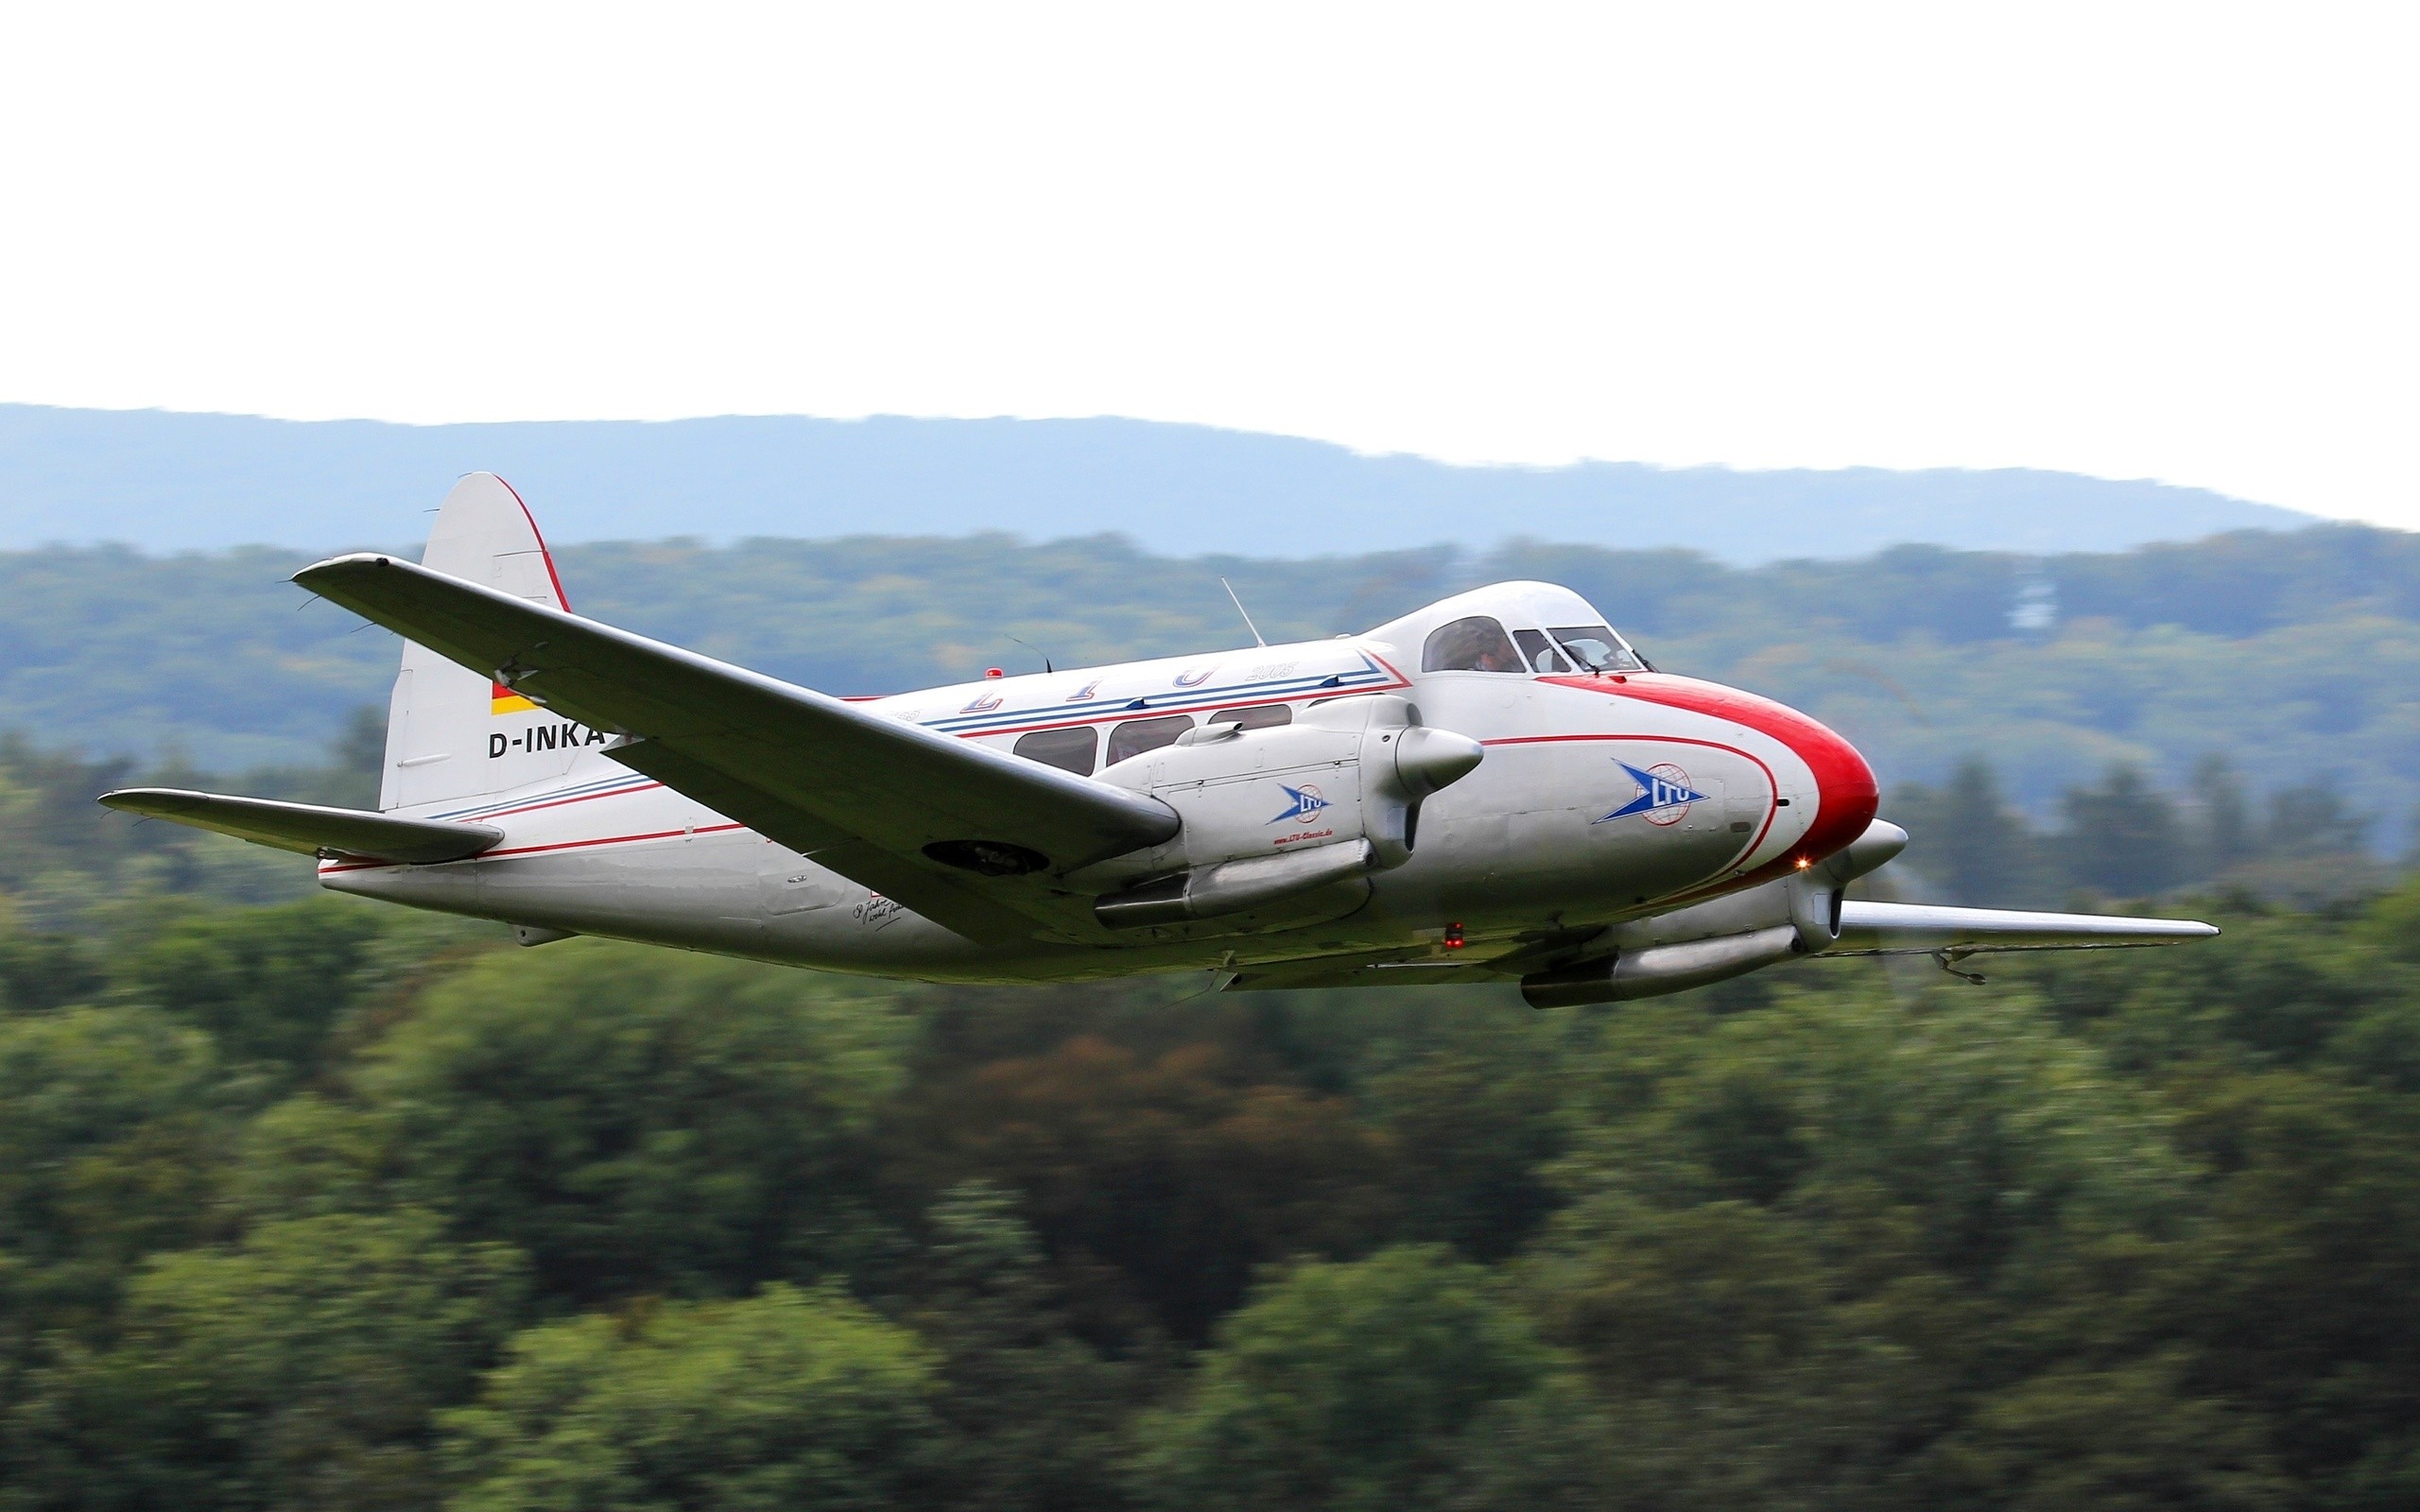 General 2560x1600 aircraft airplane motion blur aerial view vehicle De Havilland British aircraft